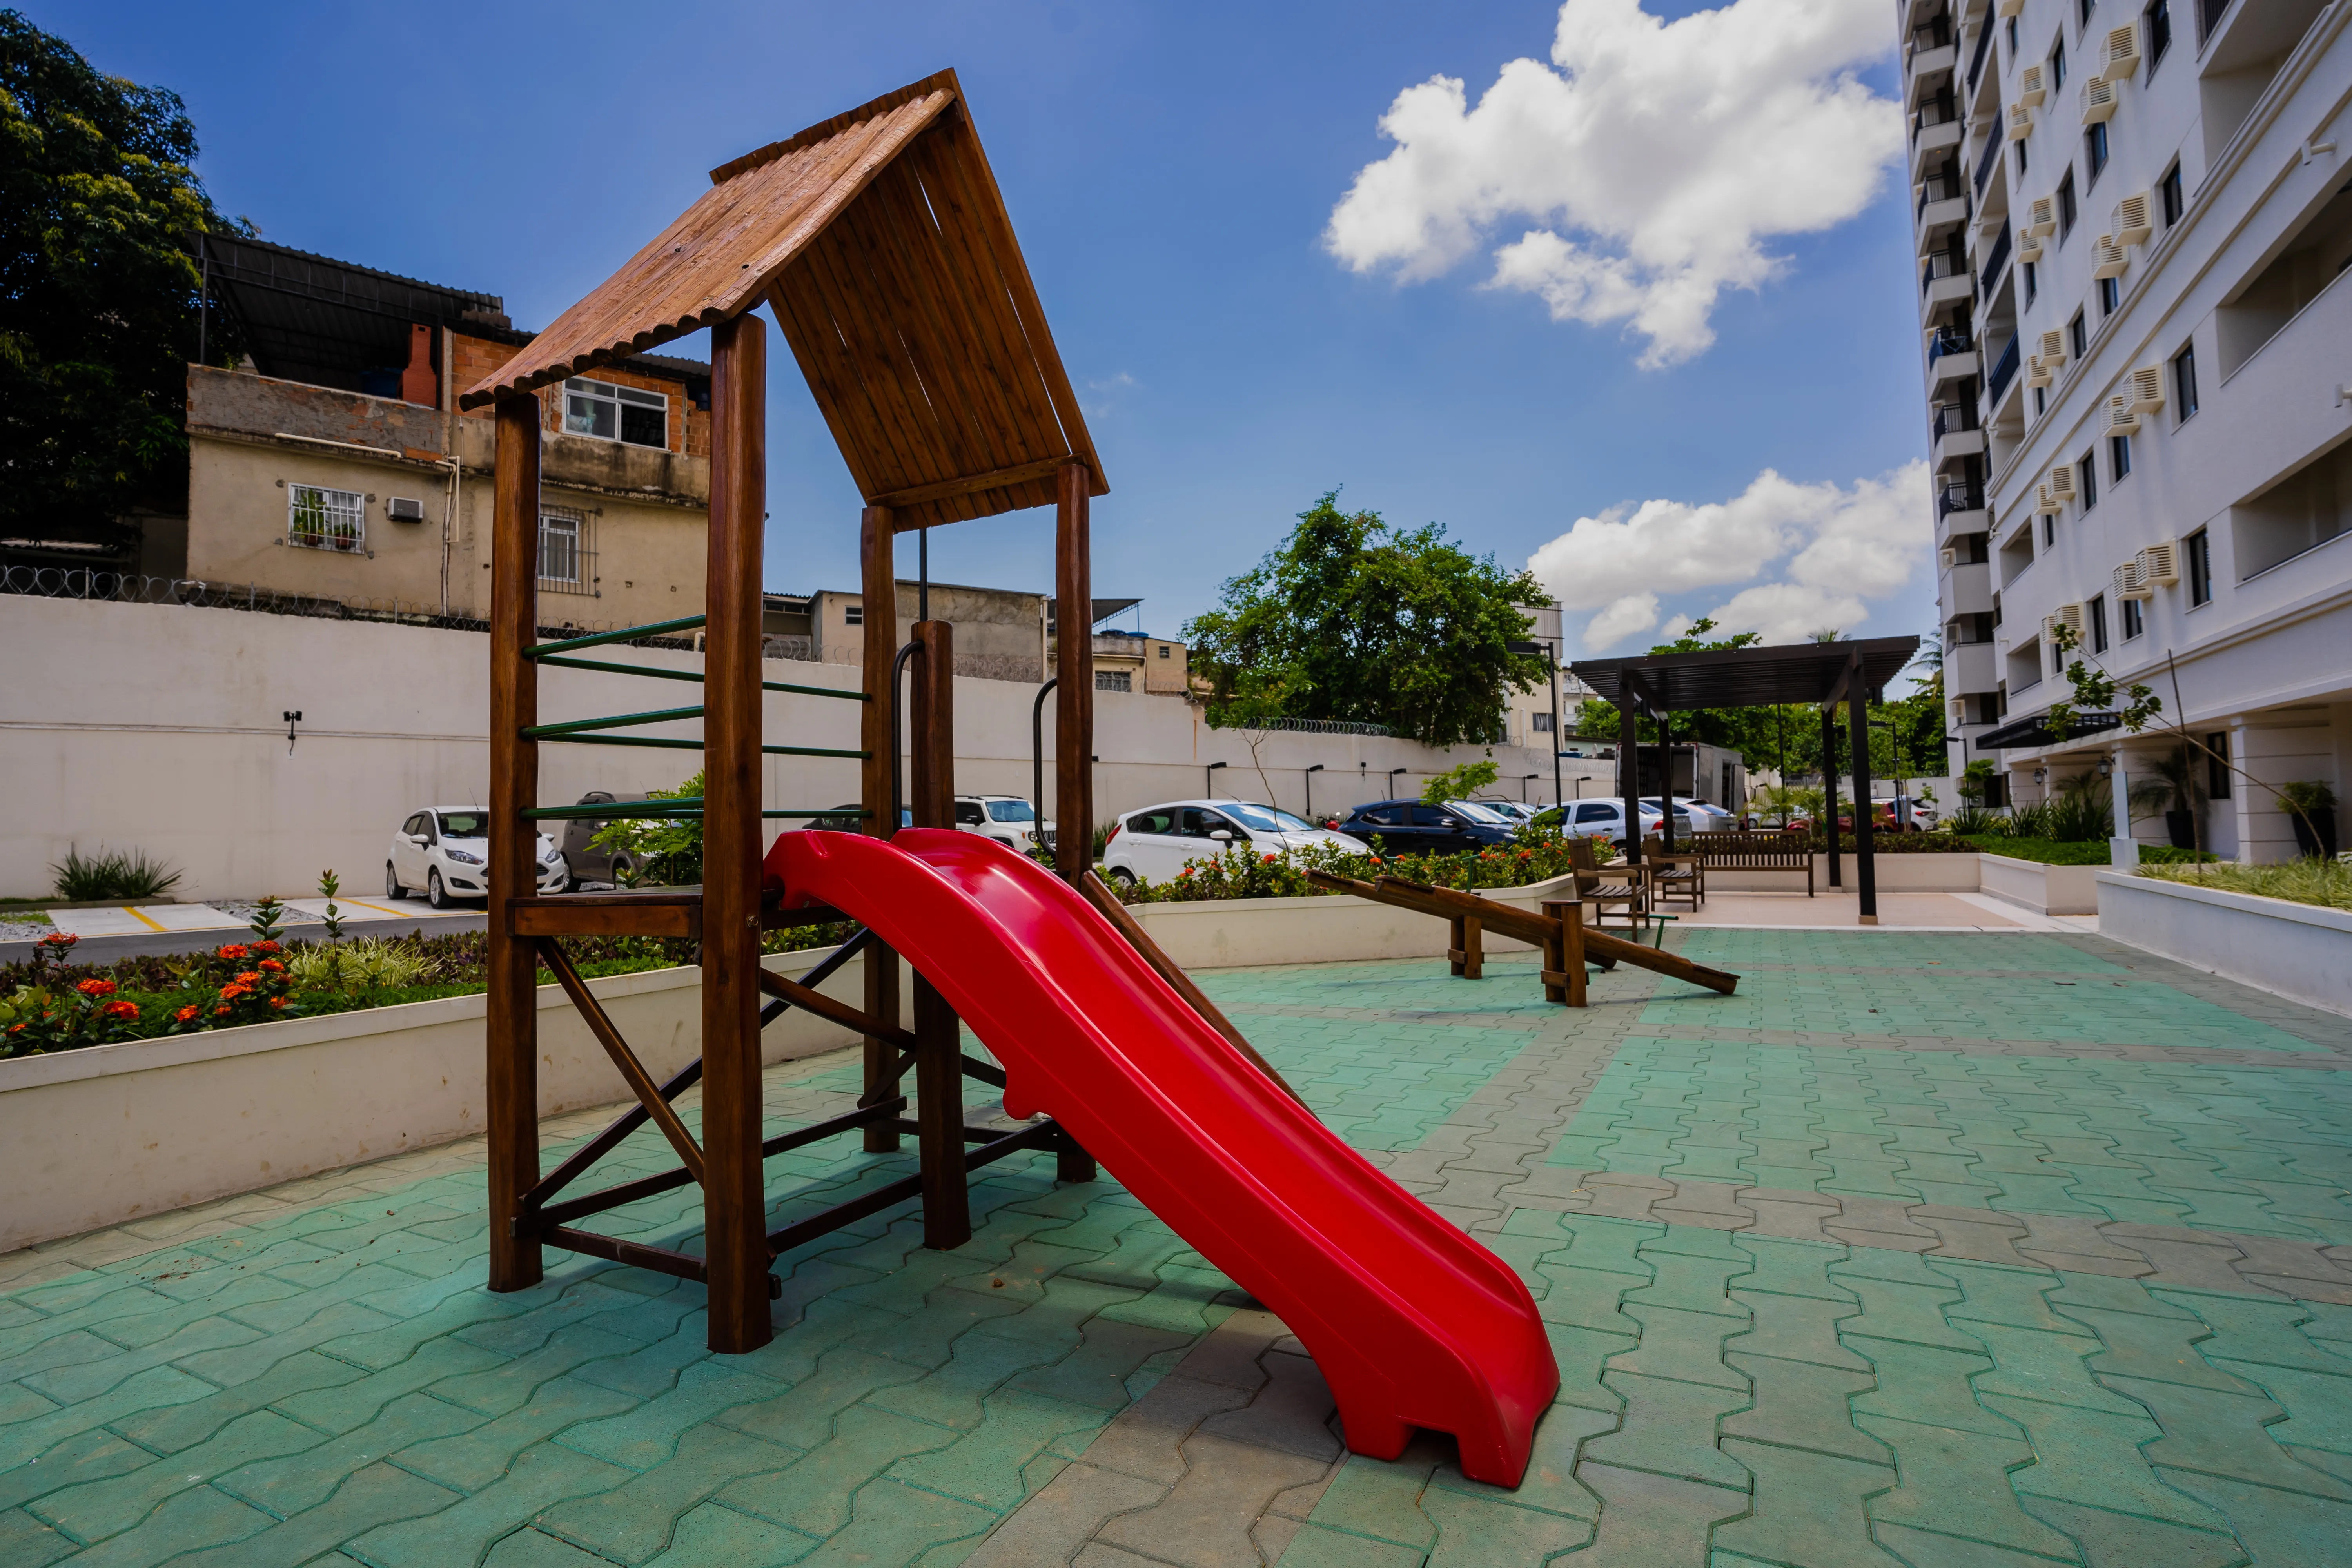 Playground Vidamerica